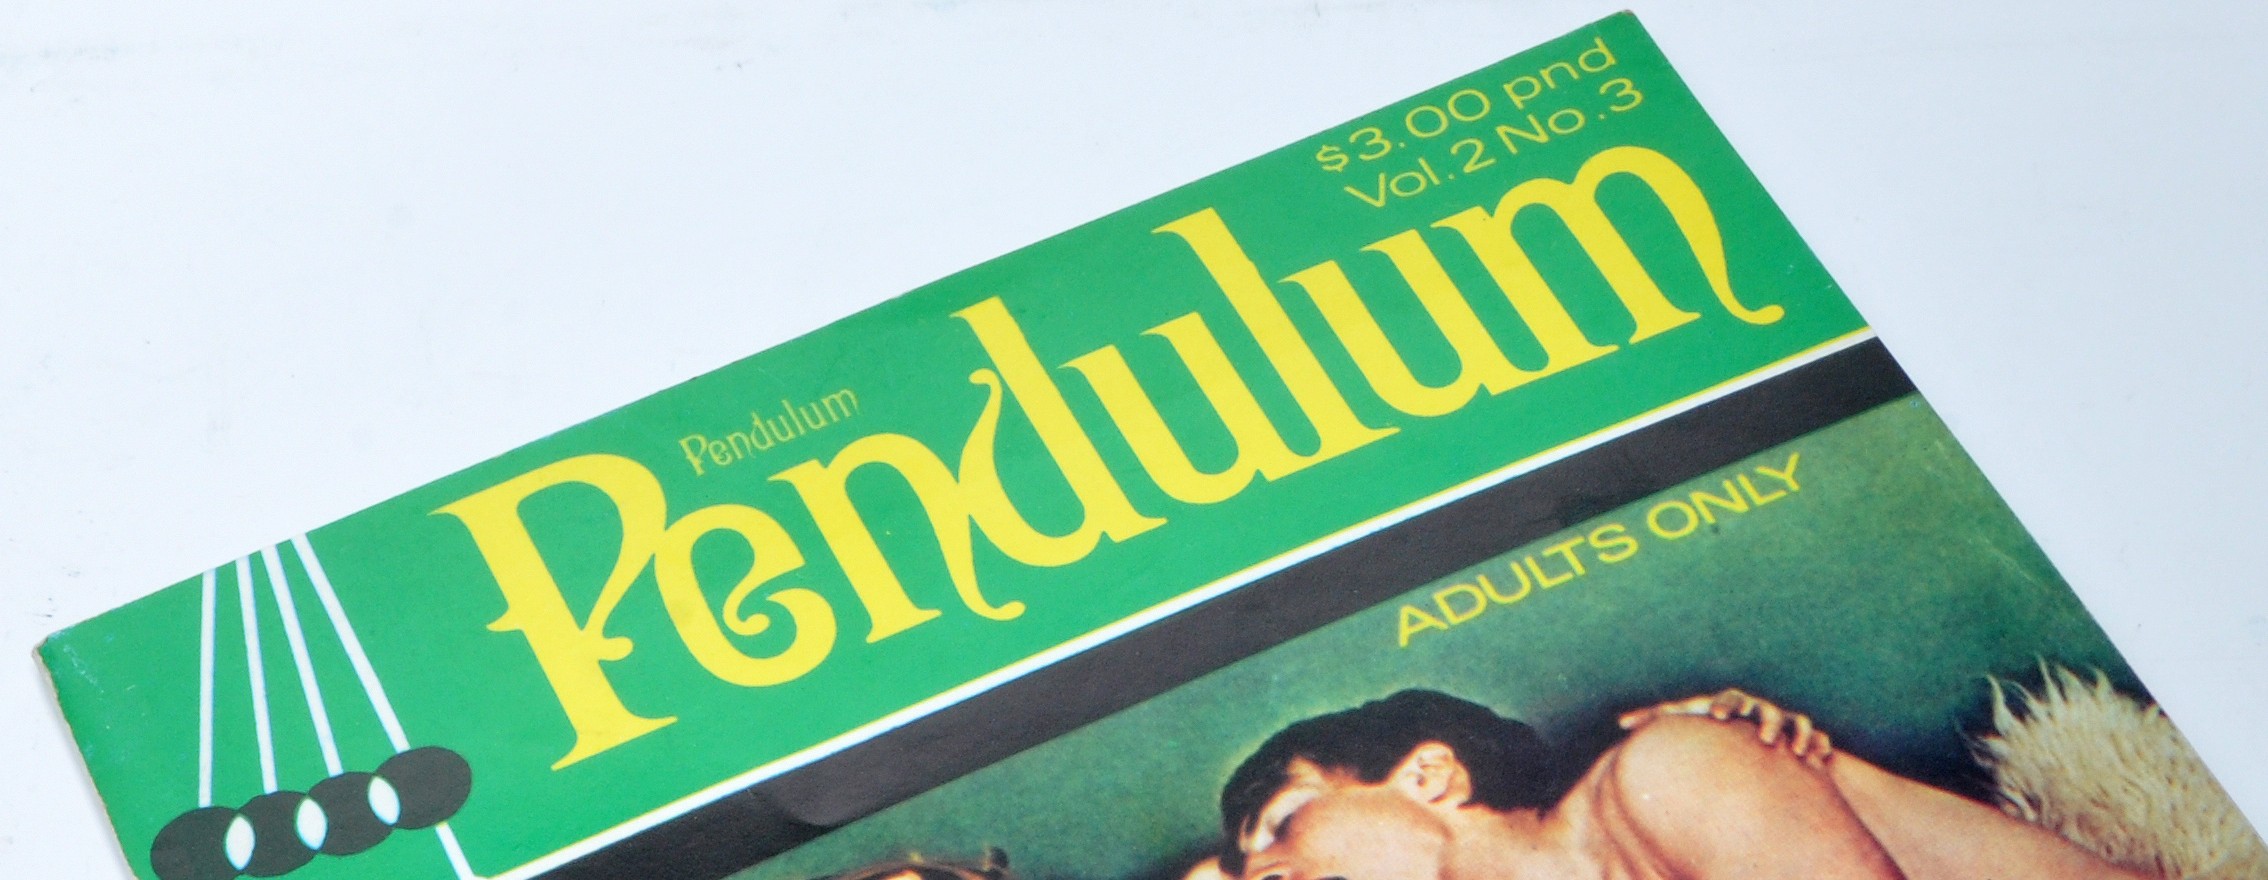 Adult Glamour Magazine / Vintage Erotica, comprising single issue of Pendulum. Please note unblurred